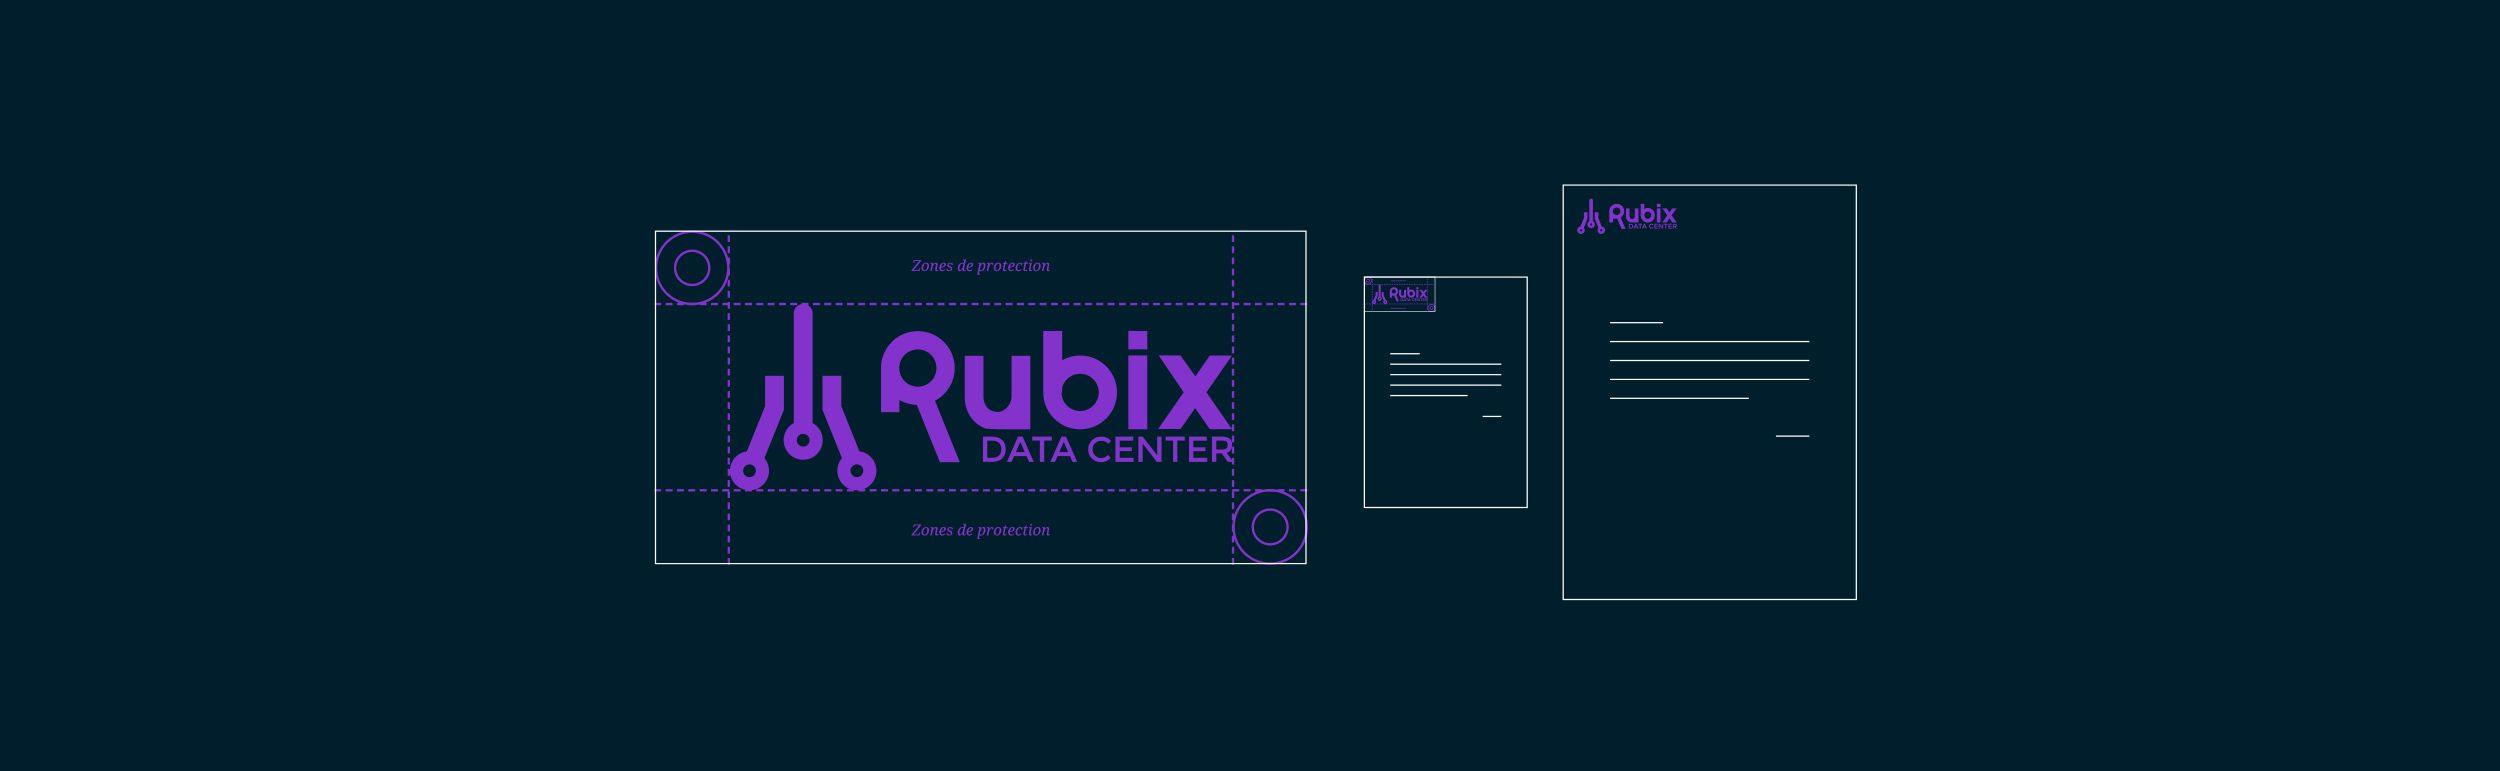 Rubix Data Center